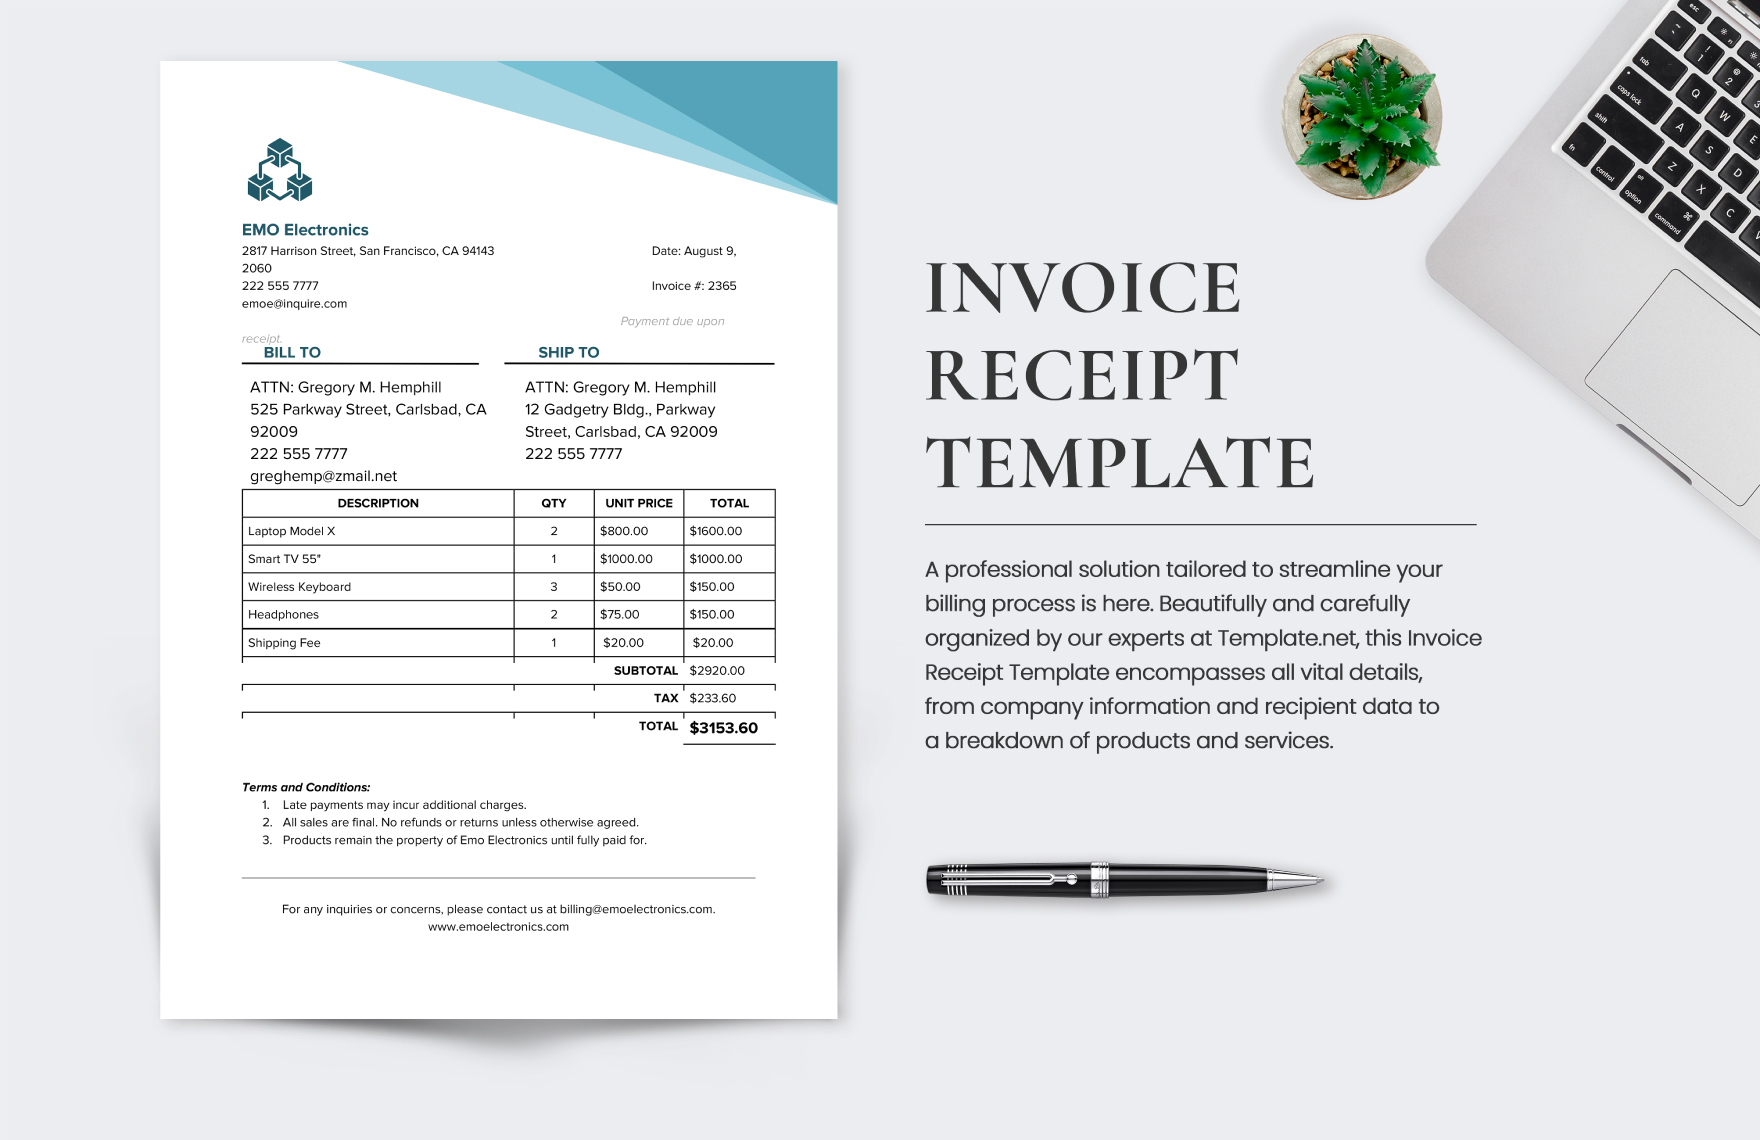 Invoice Receipt Template